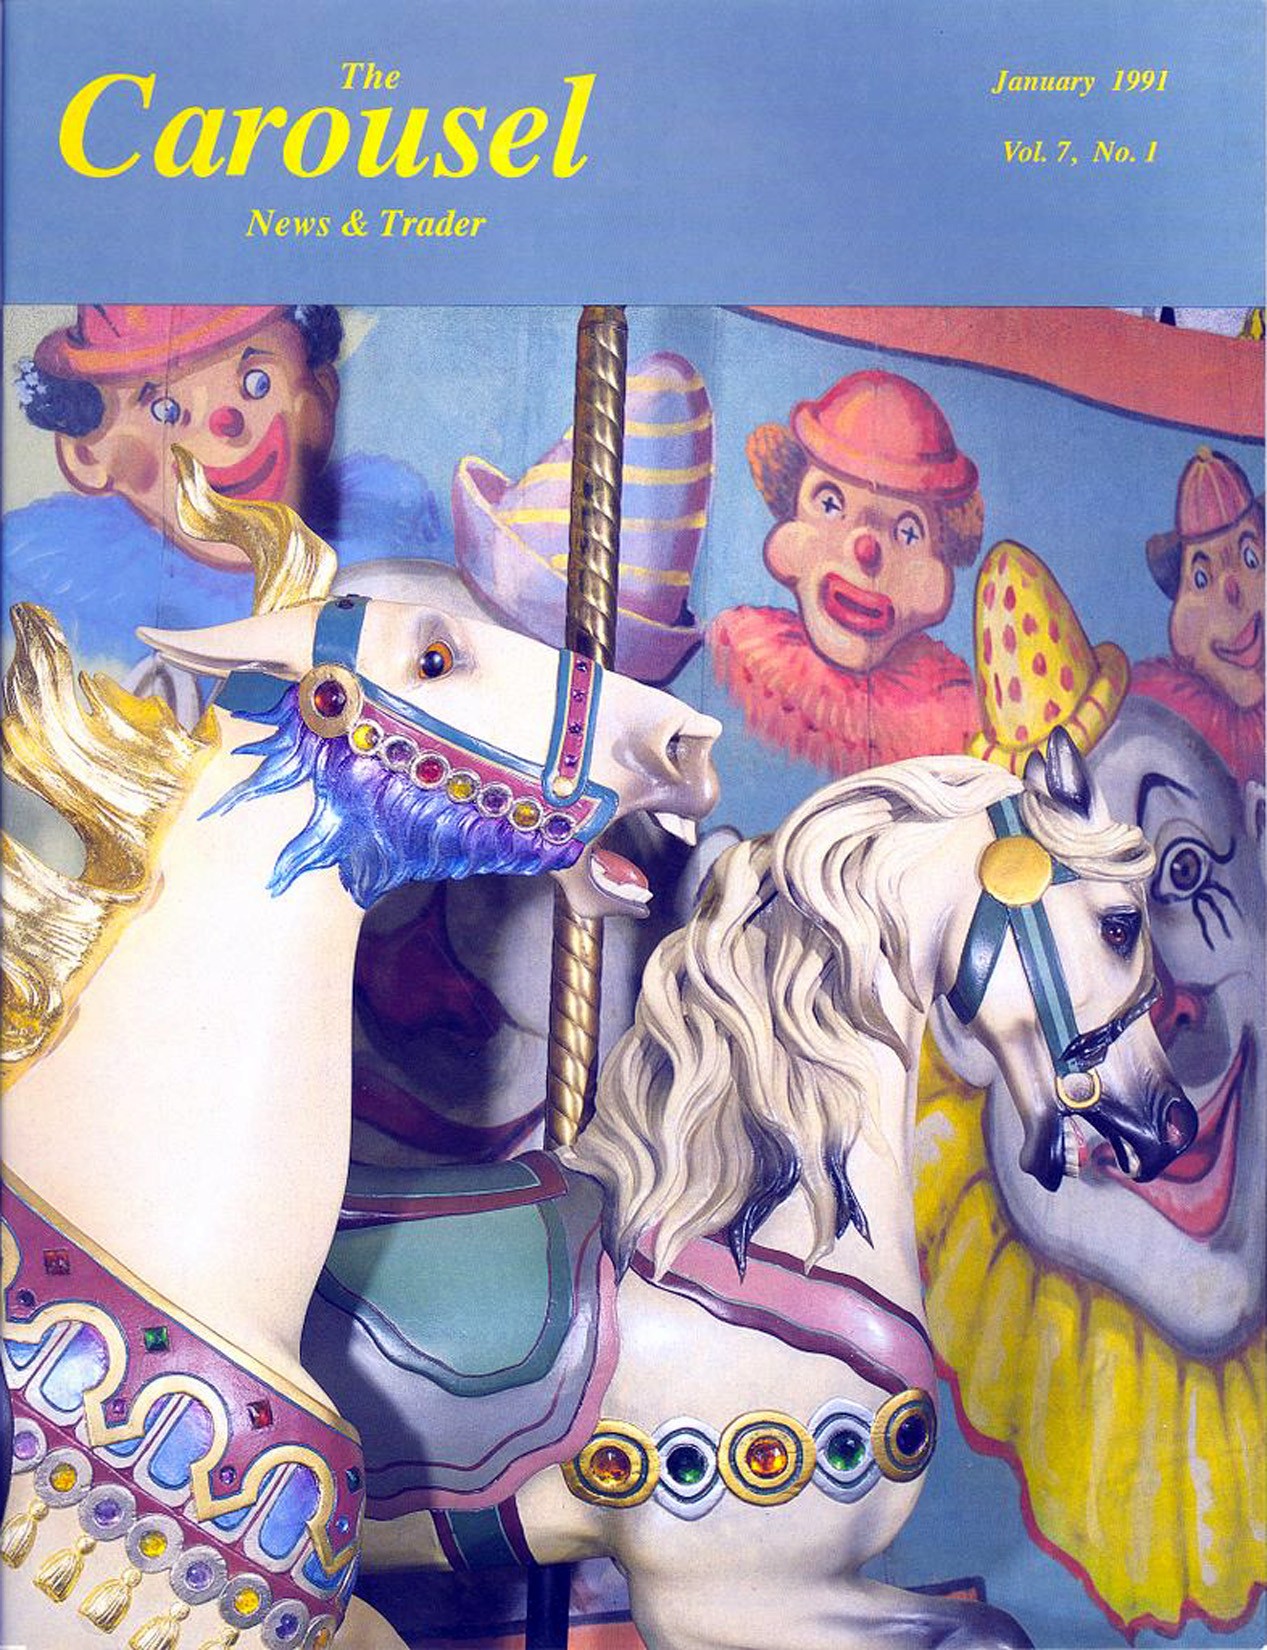 cnt_01_1991-carousel-art-meets-circus-poster-clowns